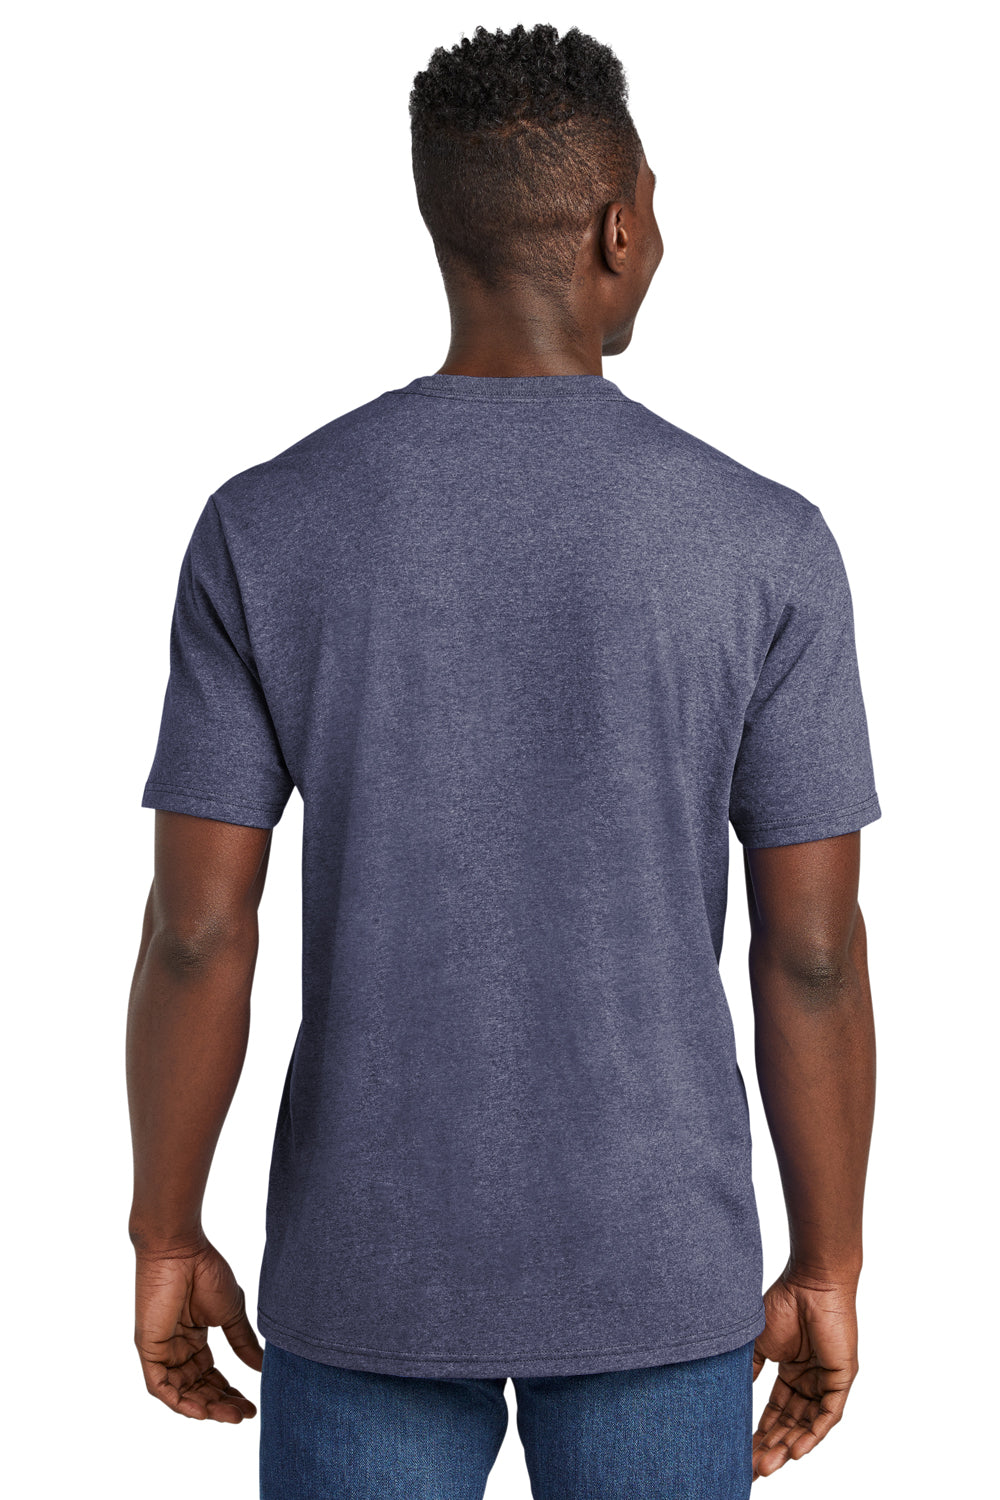 Allmade AL2300 Mens Recycled Short Sleeve Crewneck T-Shirt Heather Navy Blue Model Back